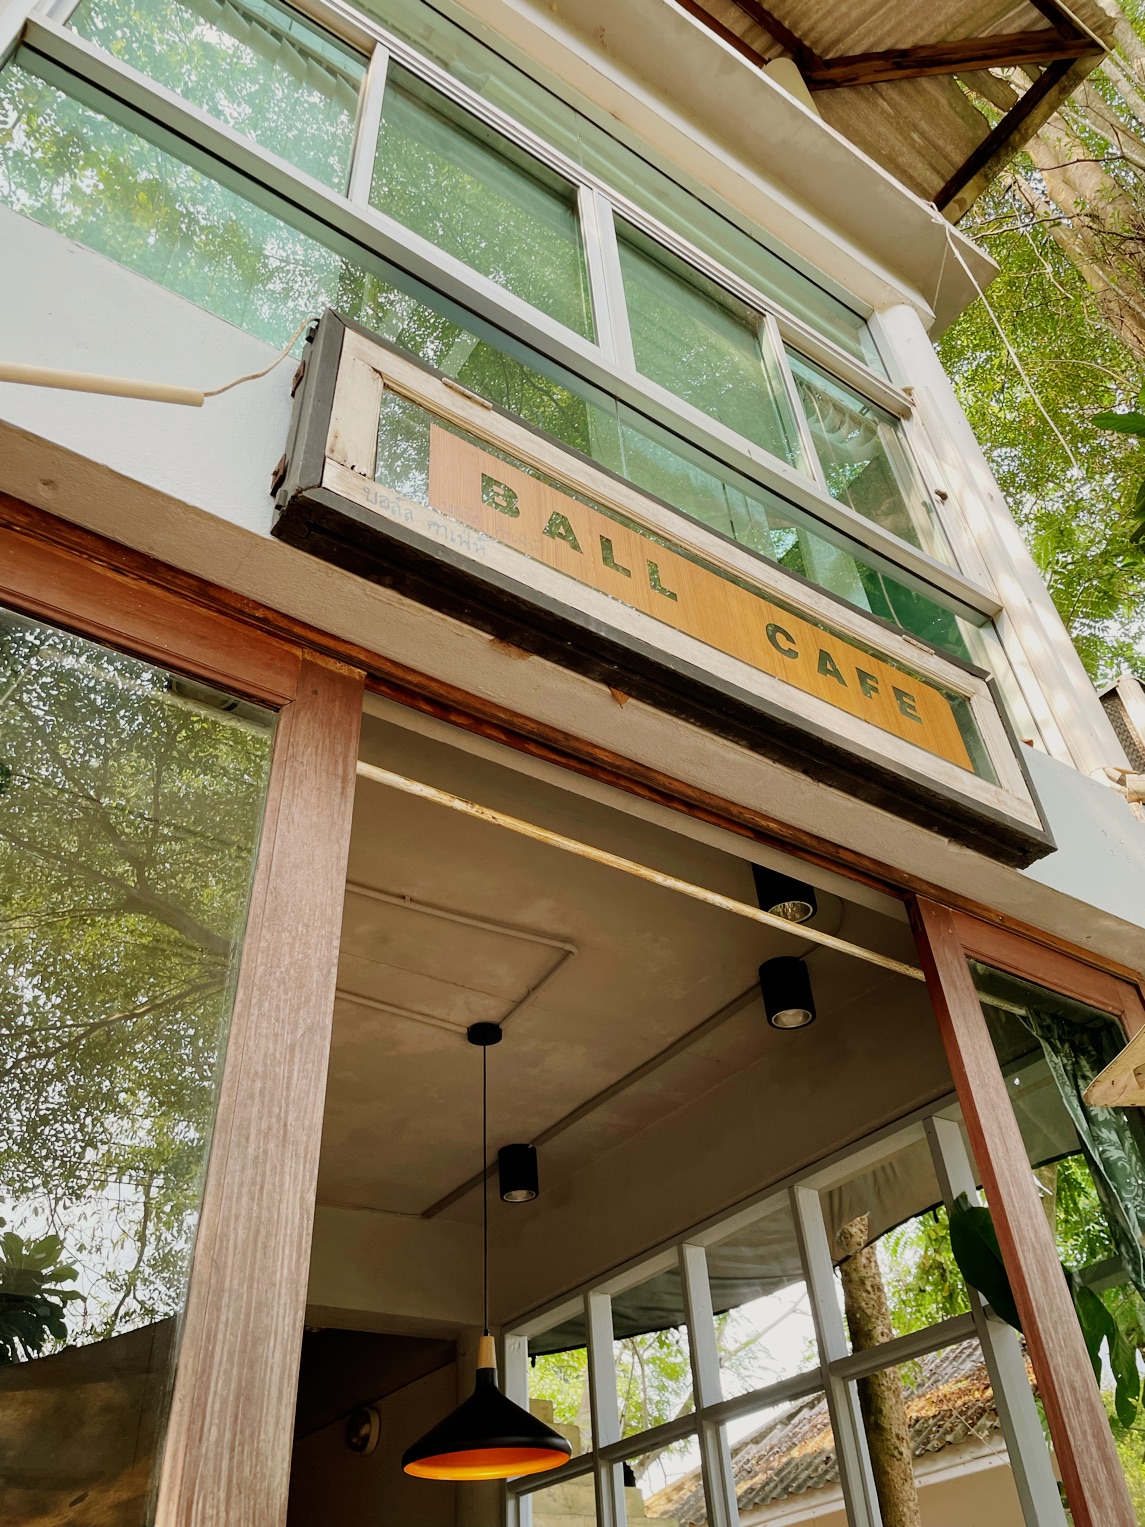 Ball cafe, the best homemade cafe in Koh Mak | Trip.com Koh Mak